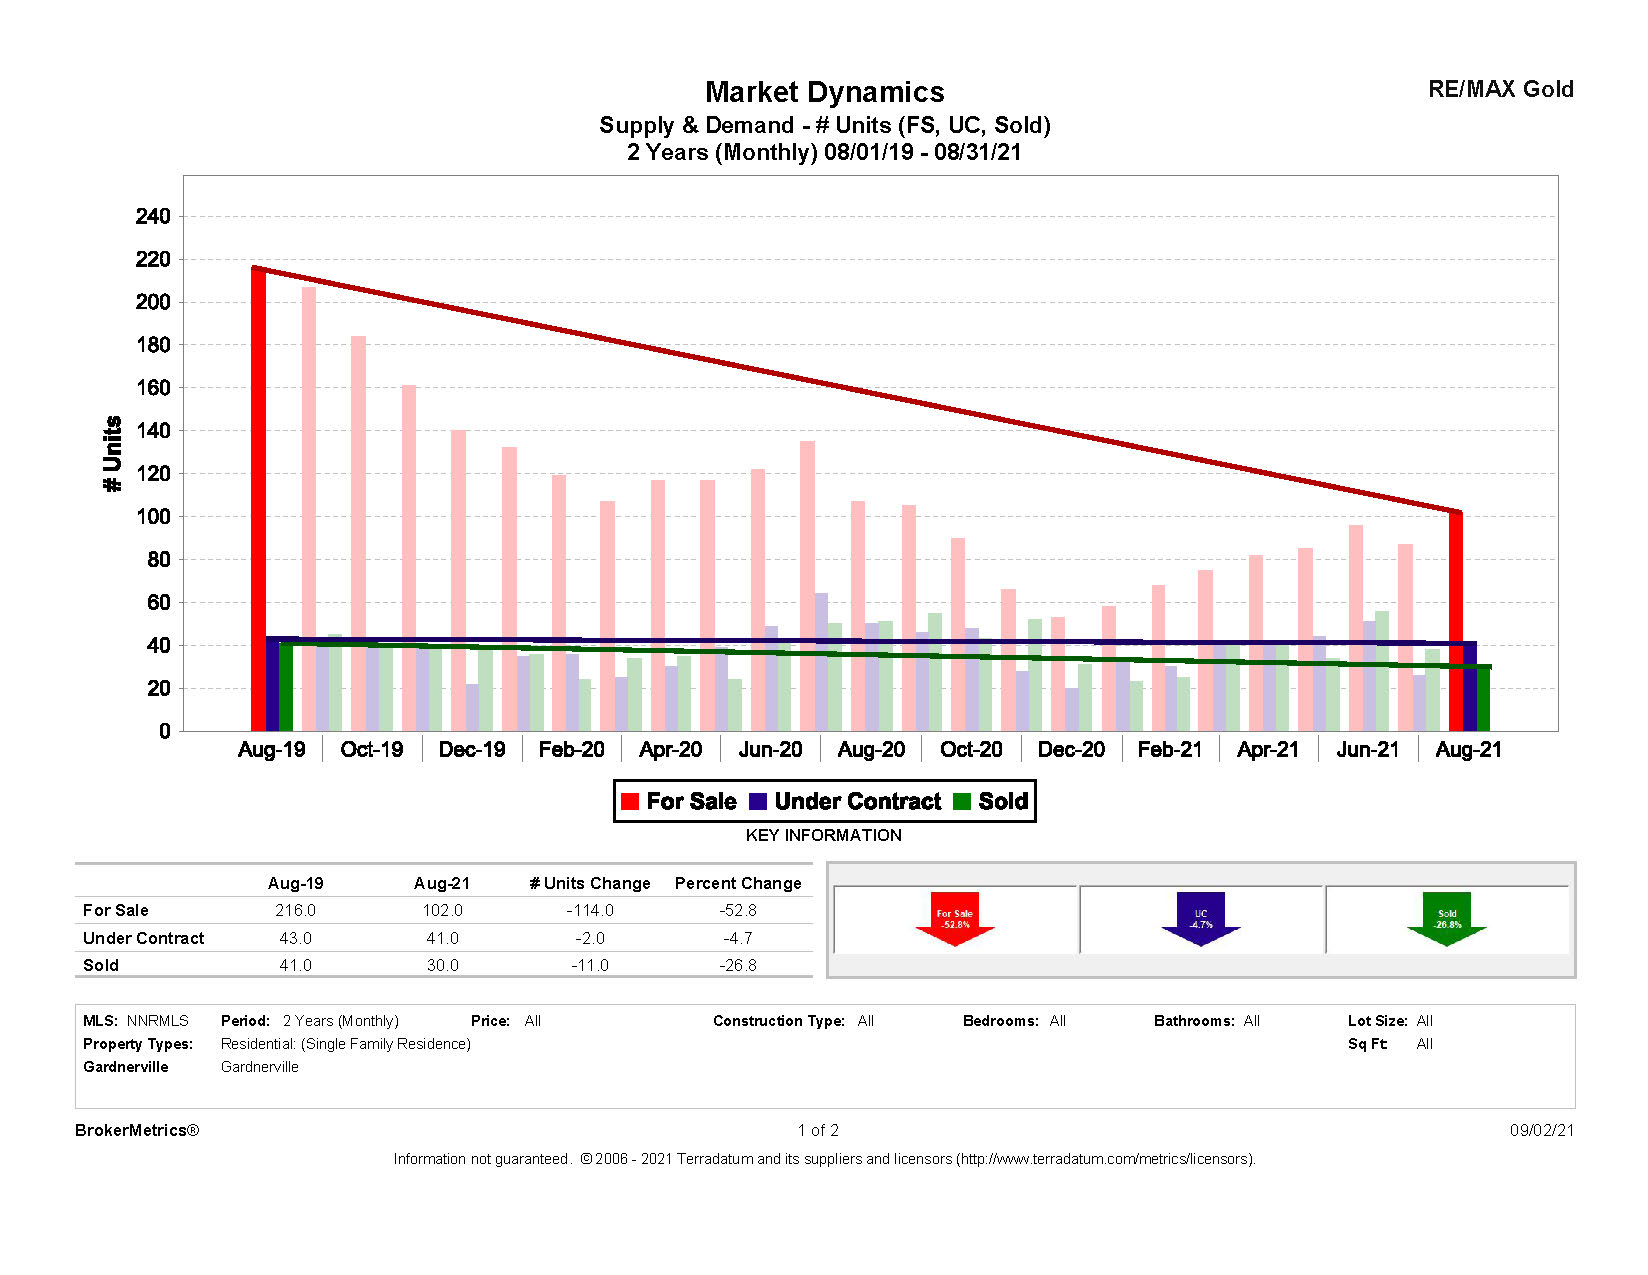 August Stats: Supply & Demand graph for Gardnerville, NV